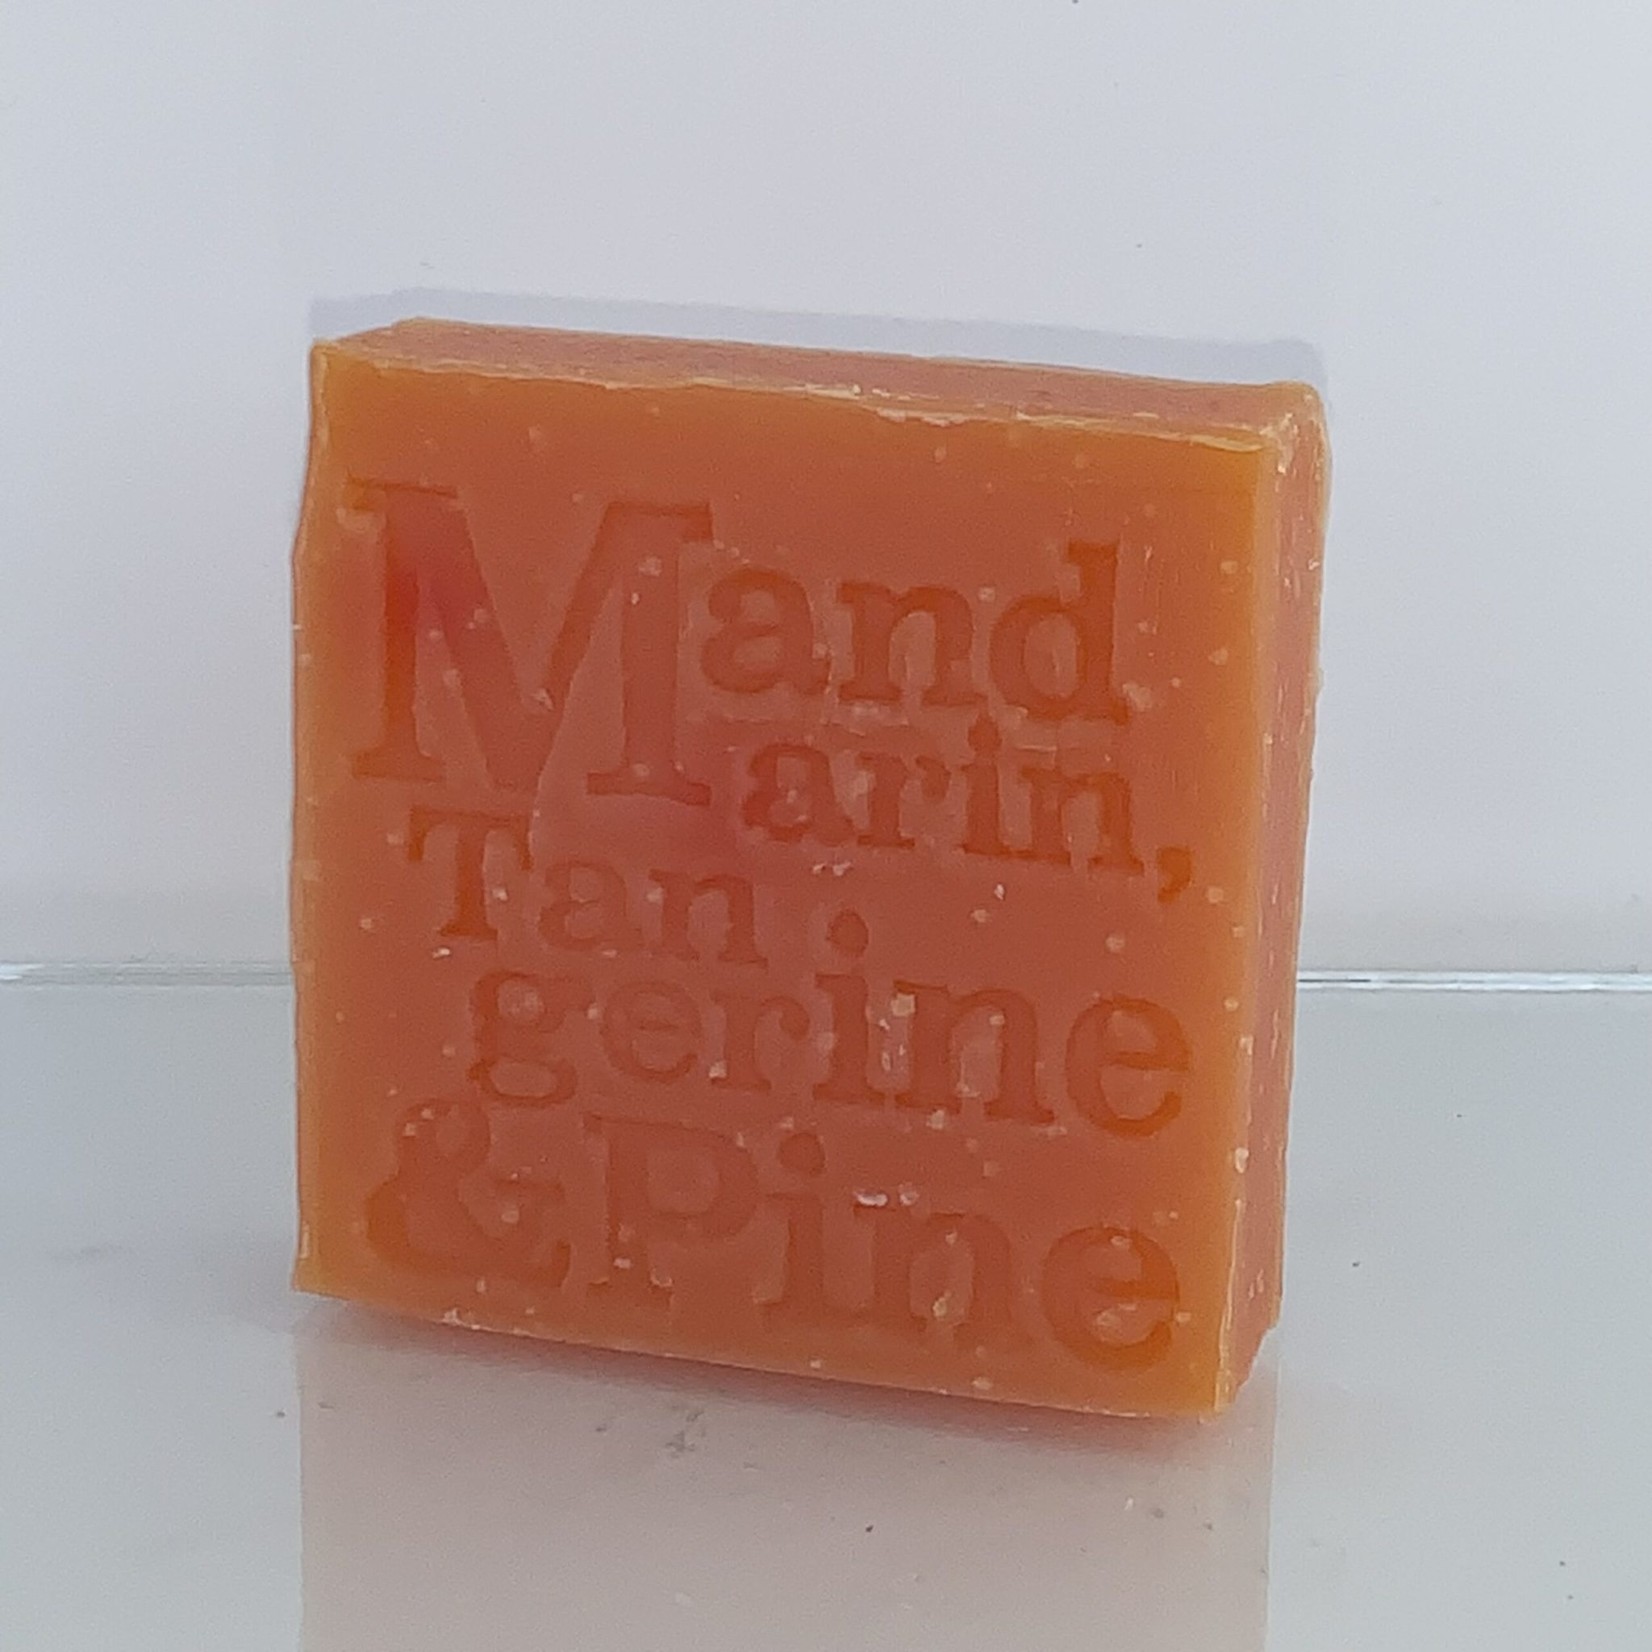 Corrynne's Corrynne's Mandarin, Tangerine & Pine Soap